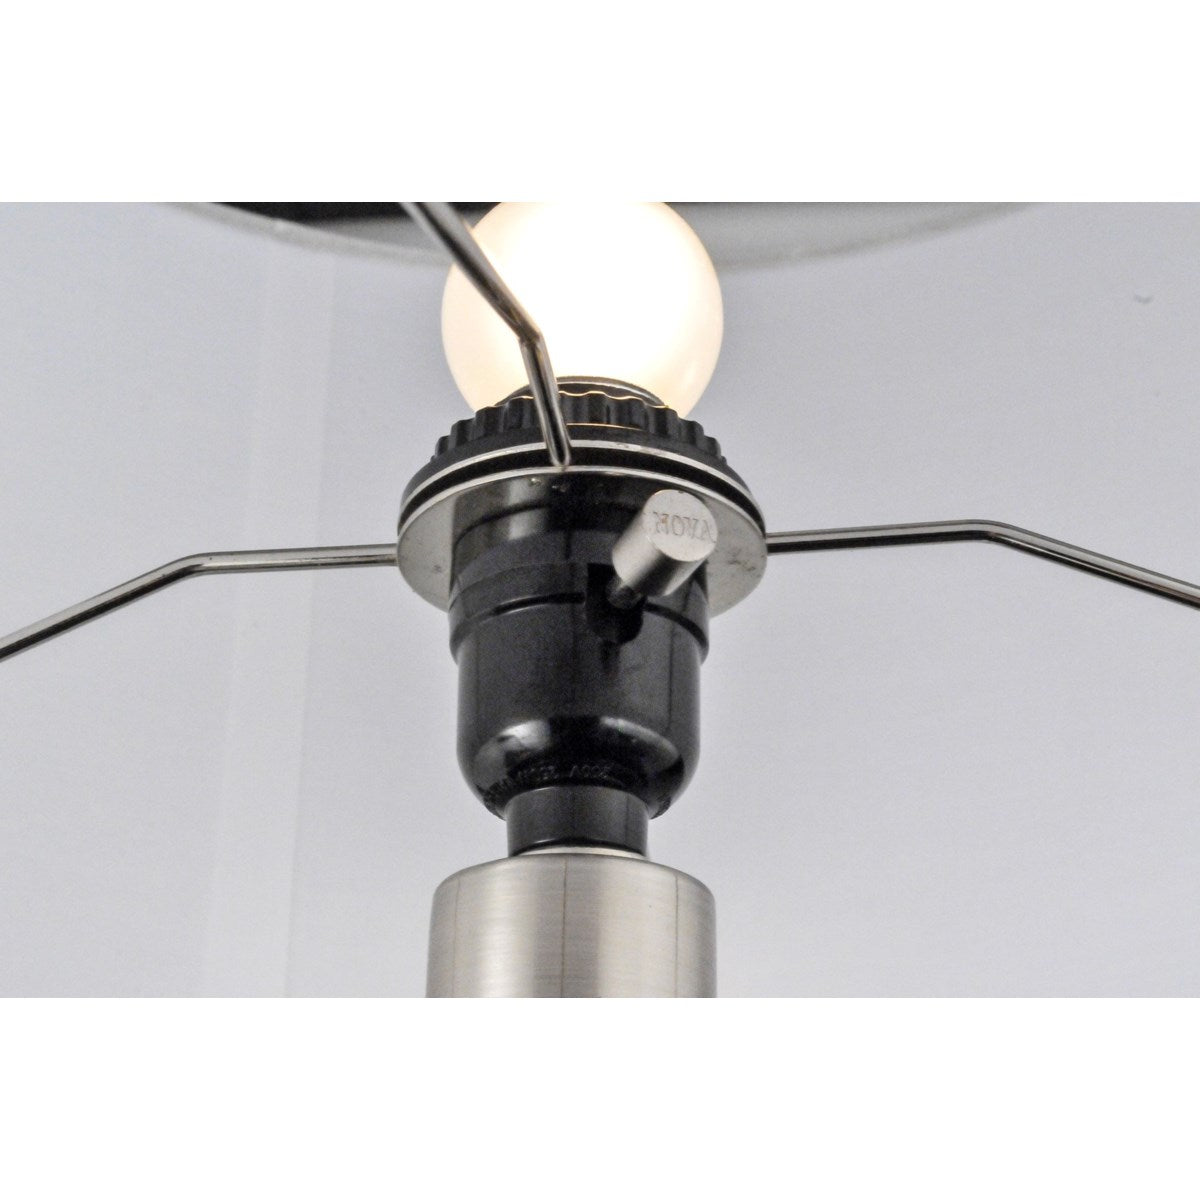 Tracey Ring Table Lamp Charcoal Gray - Nova